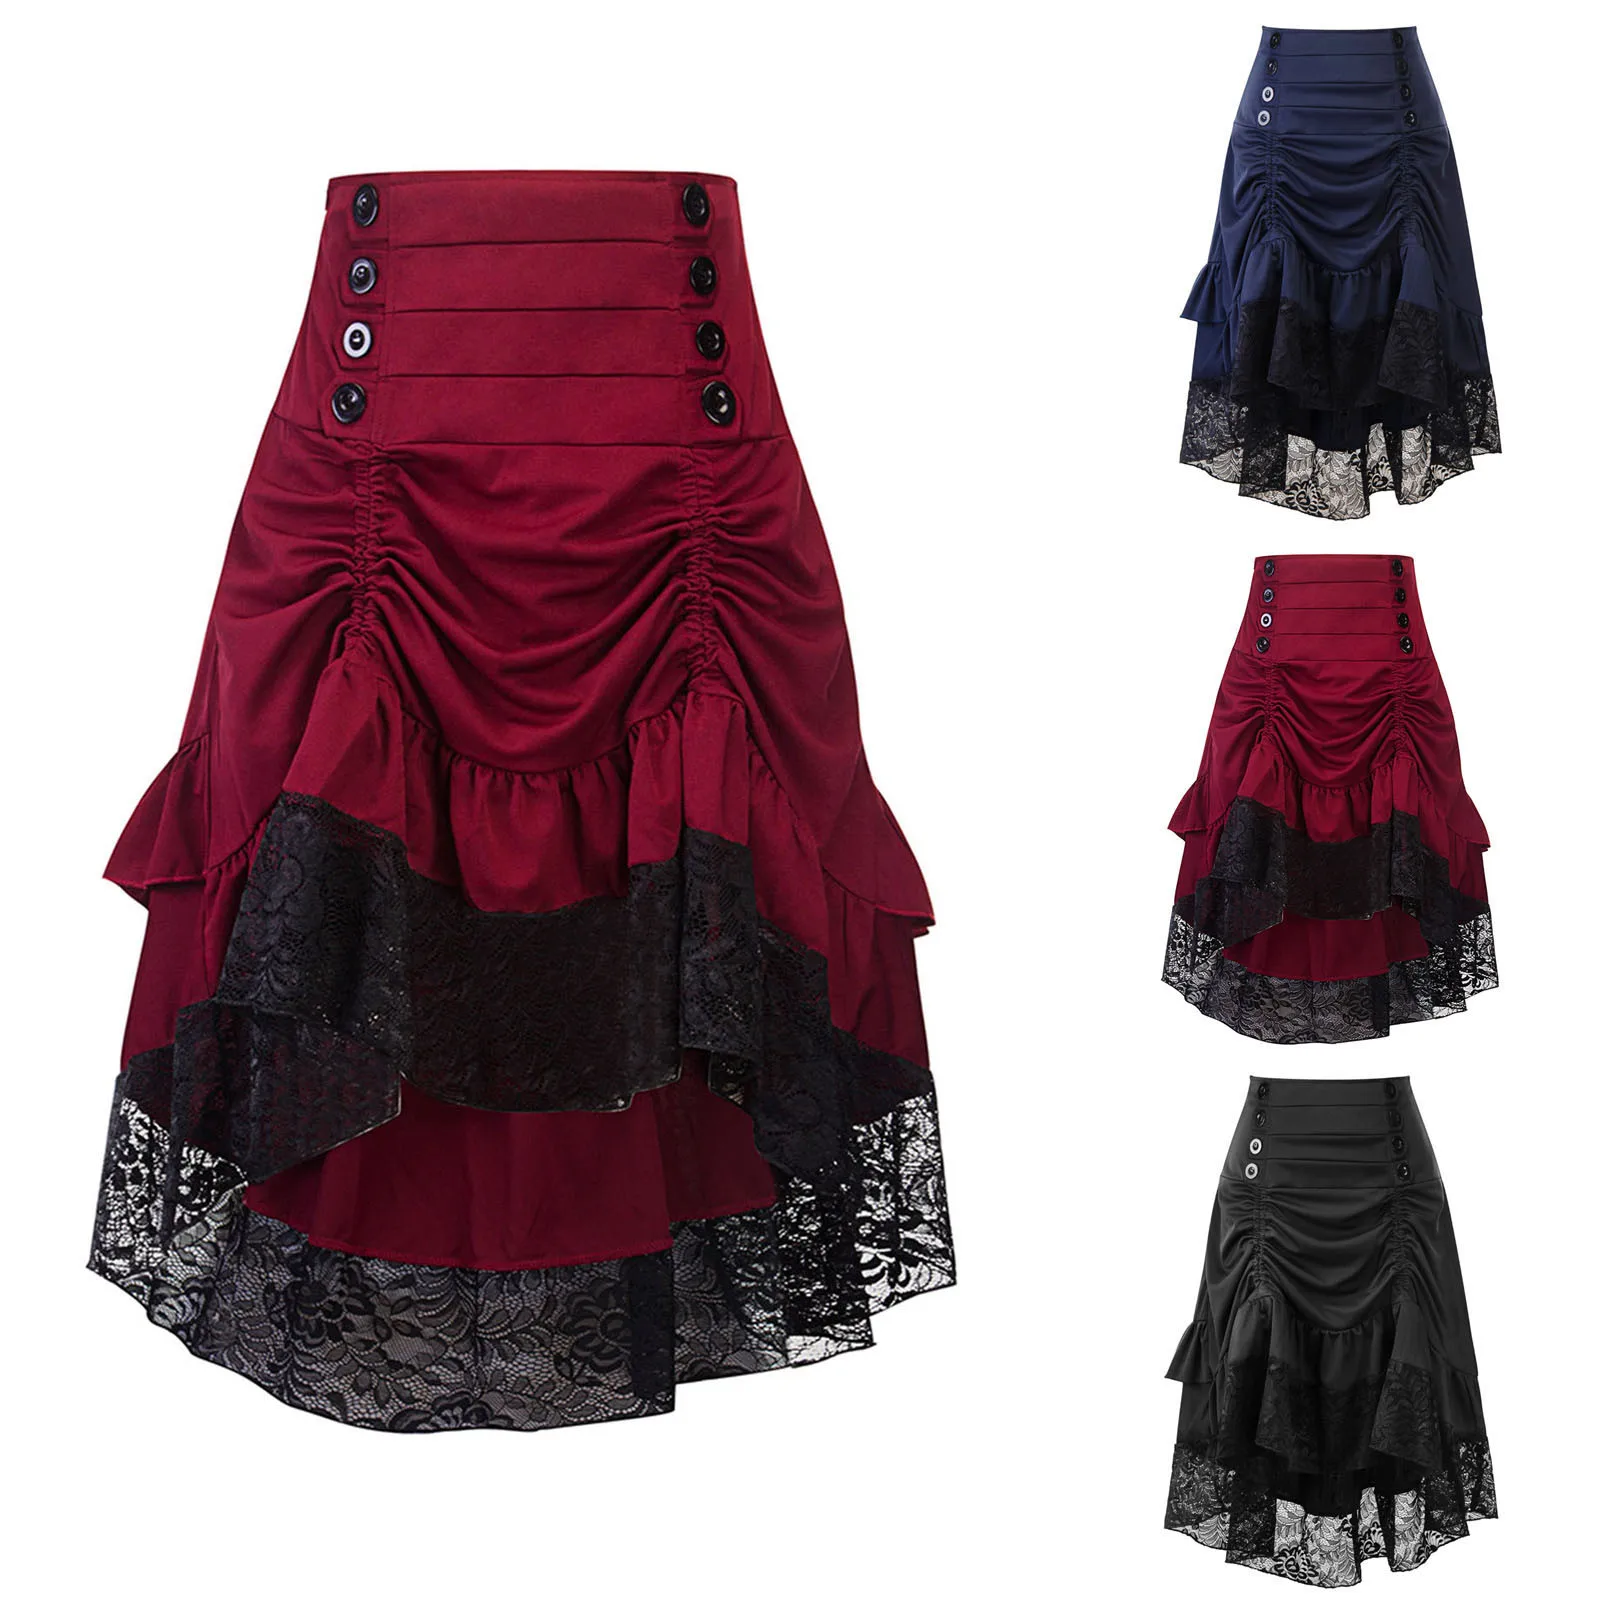 Asymmetrical Ruffled Trim Gothic Long Skirts Women Corset Skirt Vintage Steampunk Showgirl Party Dress Skirts For Teen Girls